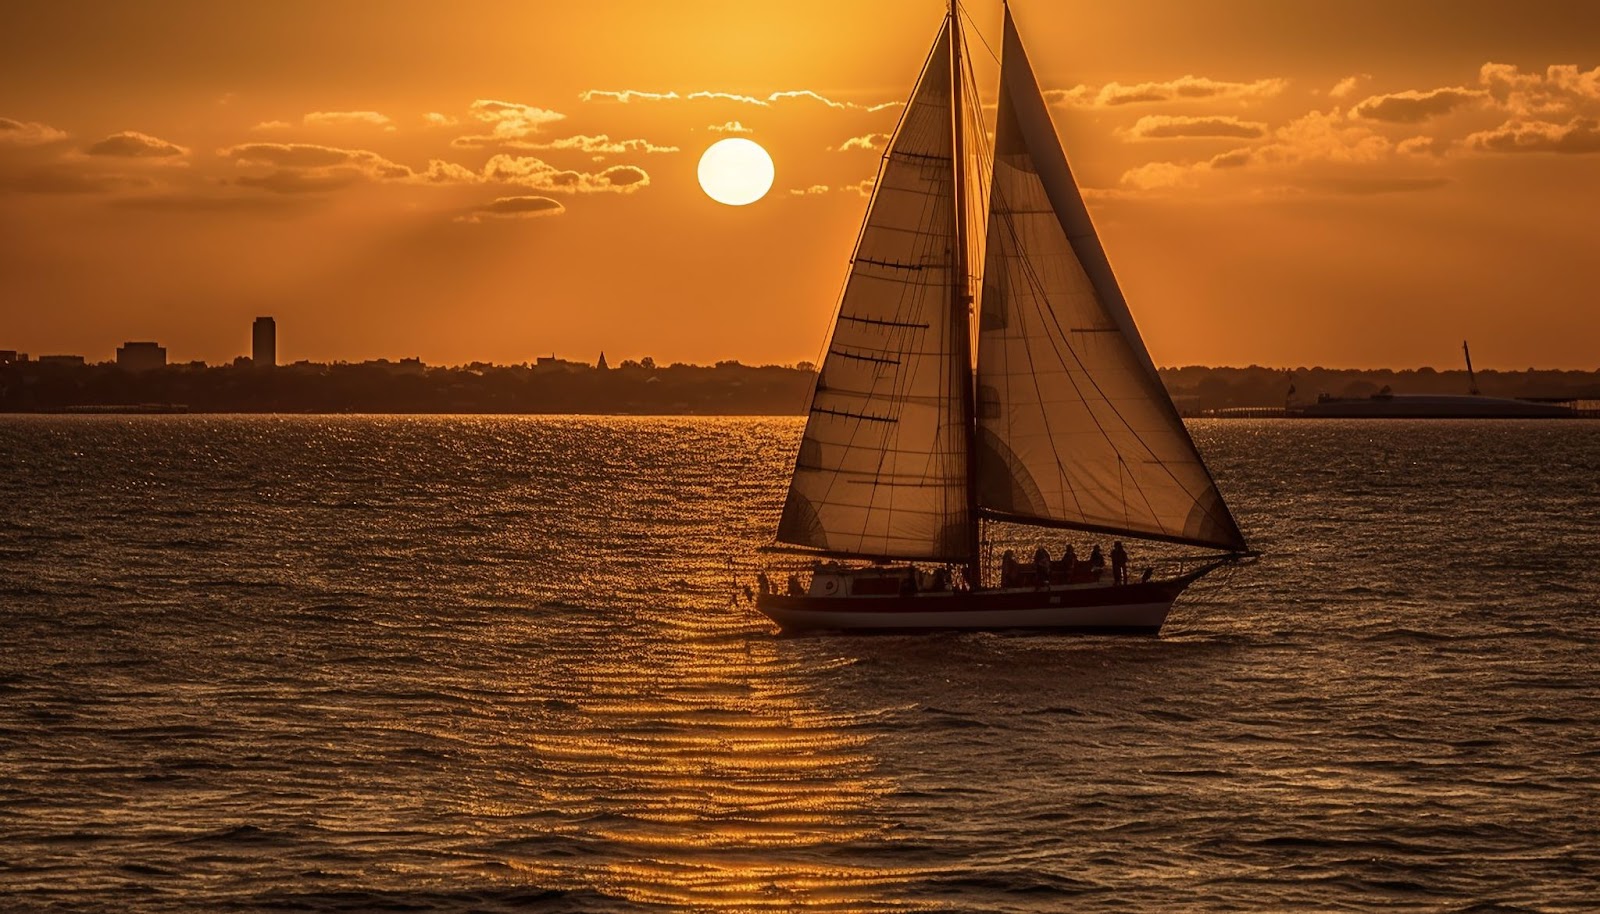 Sailing ship on the sunset